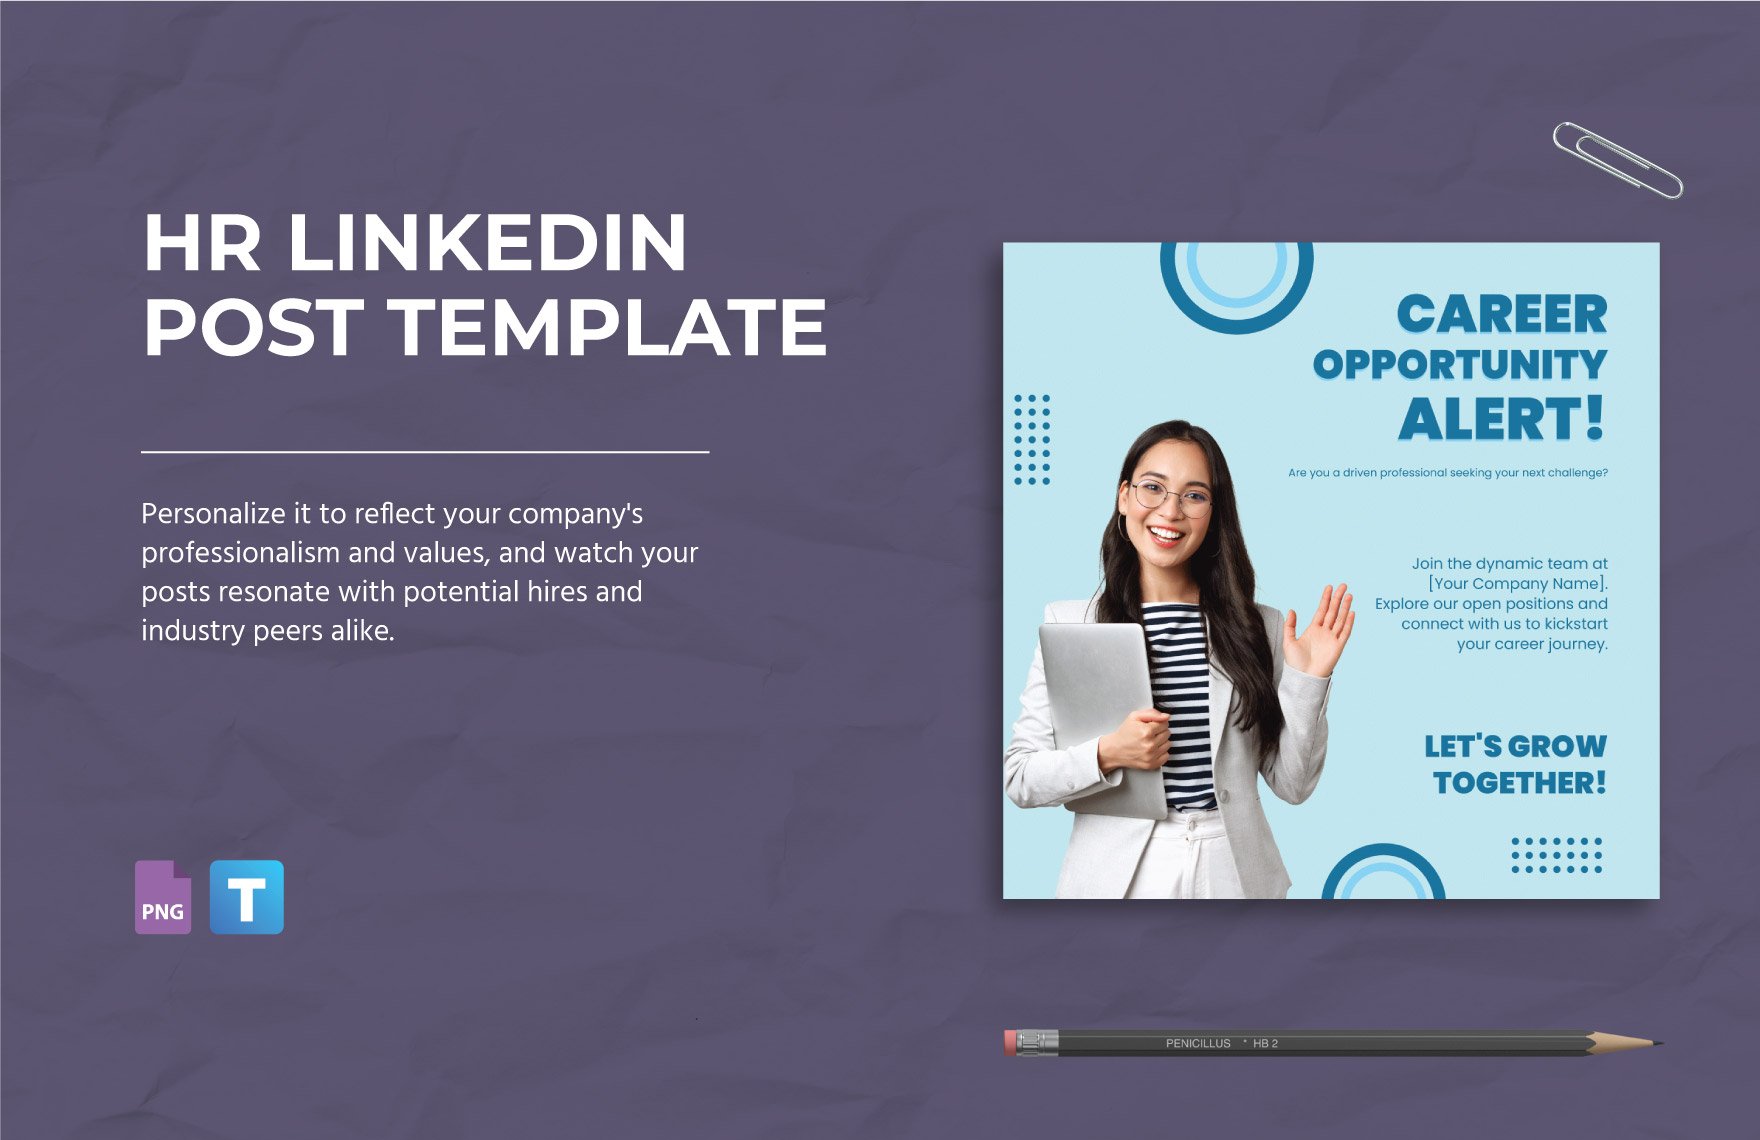 HR LinkedIn Post Template